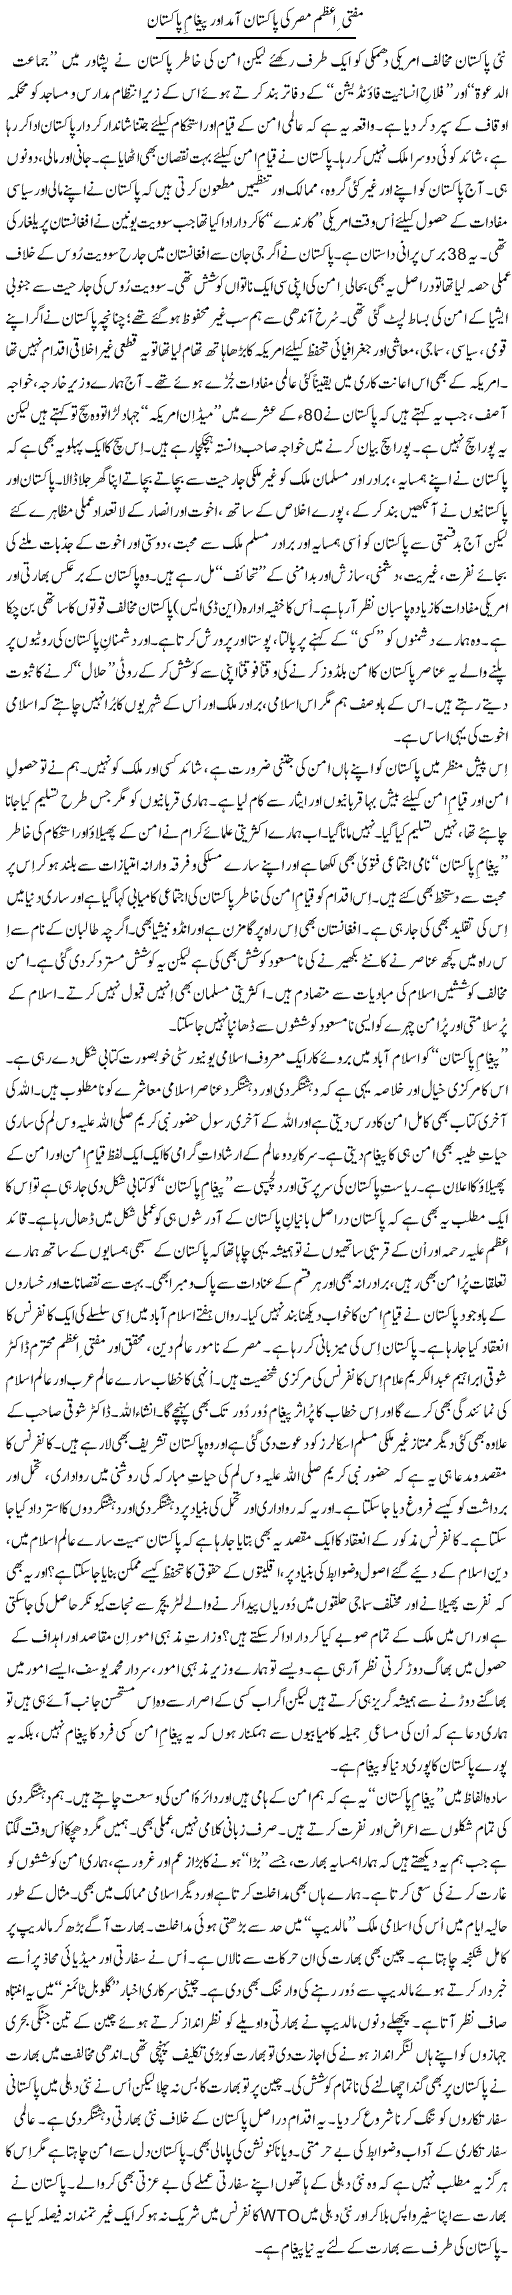 Mufti Azam Misar Ki Pakistan Amad Aur Pegham Pakistan | Tanveer Qaisar Shahid | Daily Urdu Columns